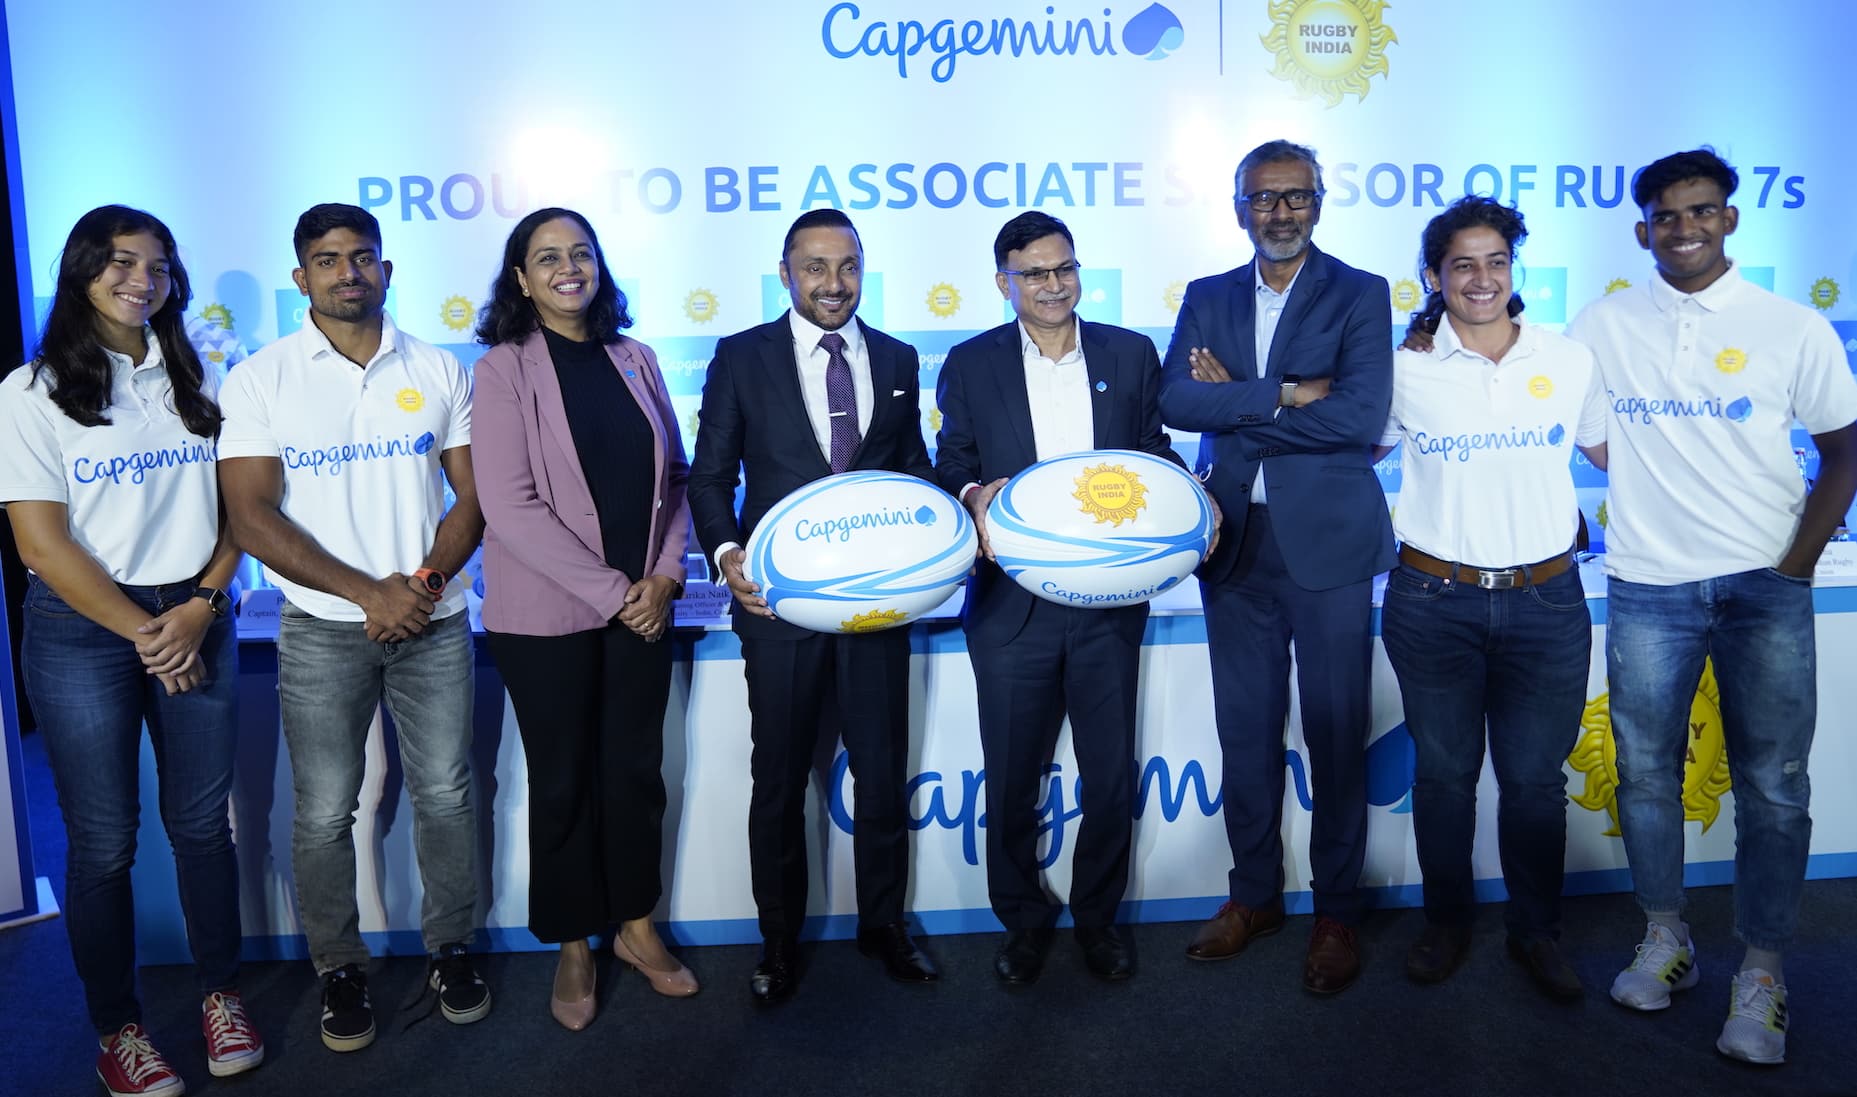 Capgemini to sponsor Rugby 7s in India